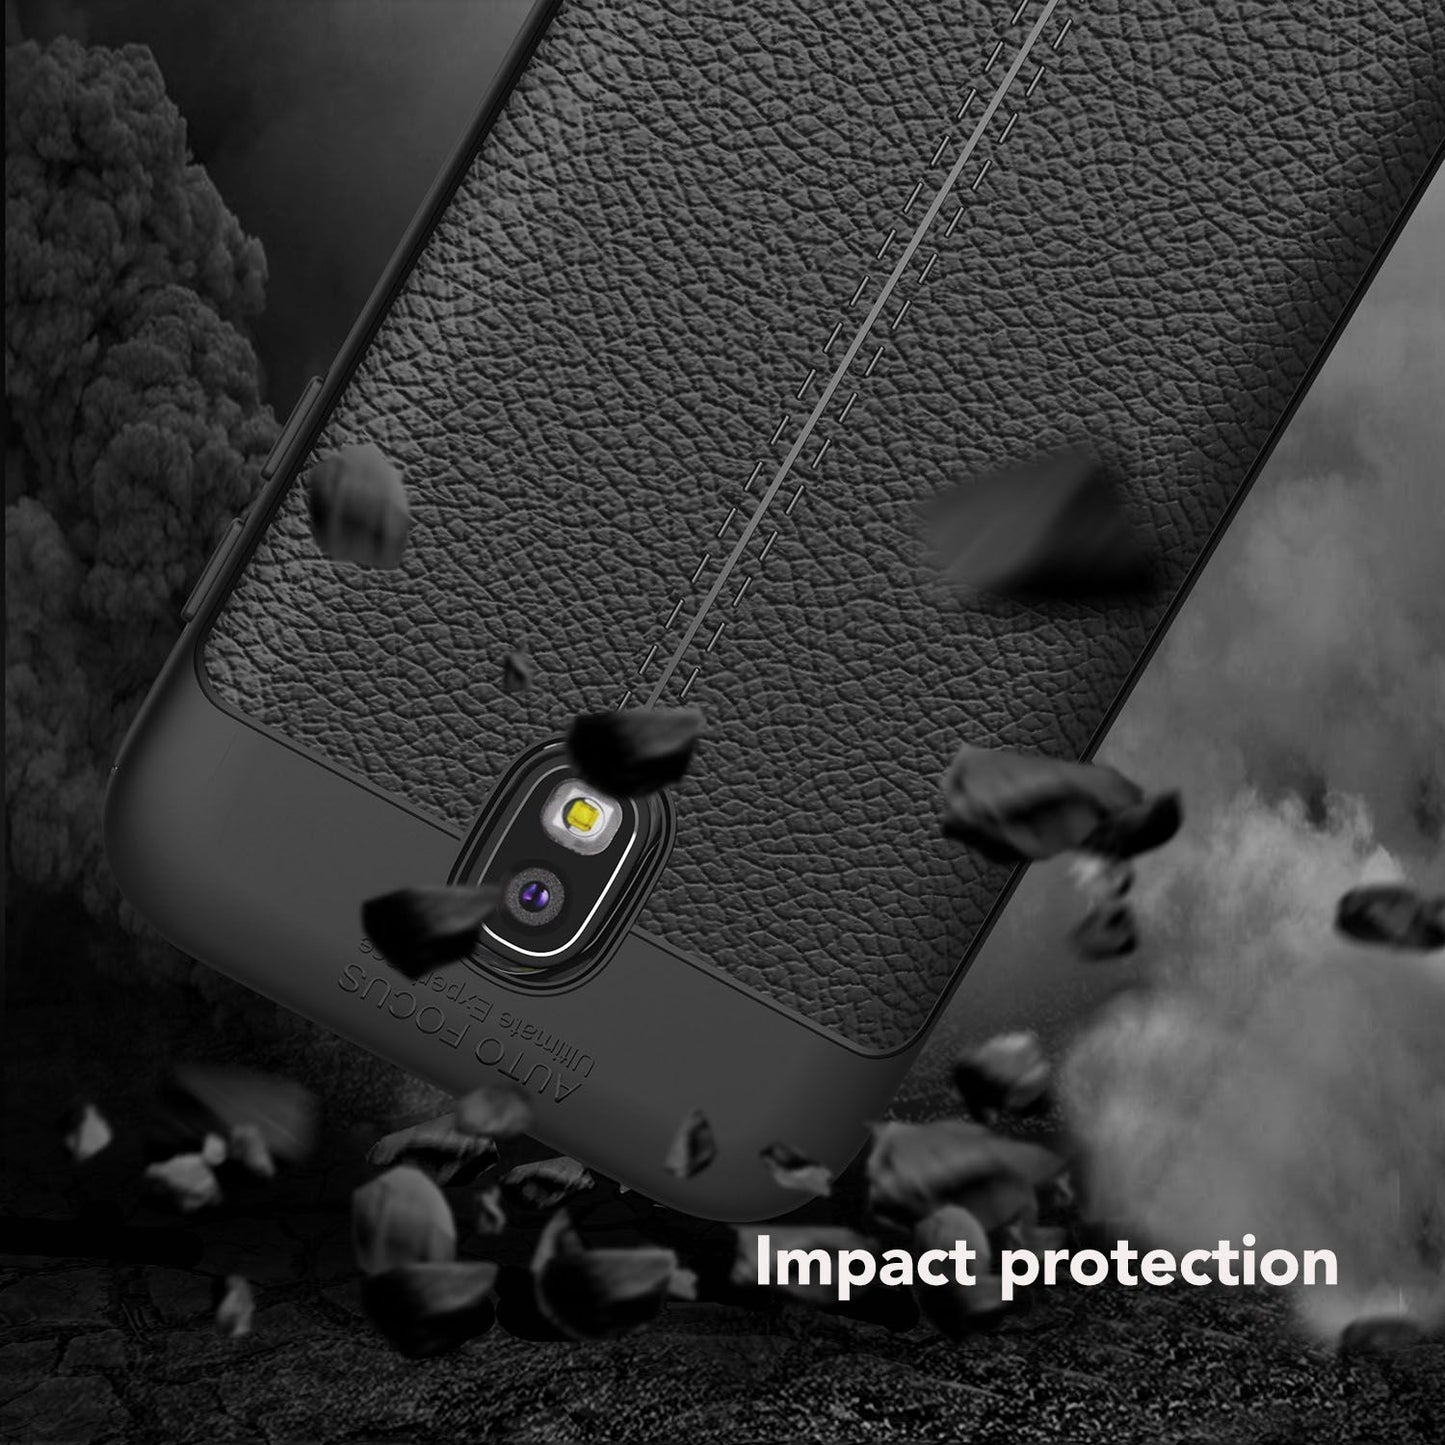 NALIA Handy Hülle für Samsung Galaxy J3 2017, Silikon Schutz Case Cover Bumper